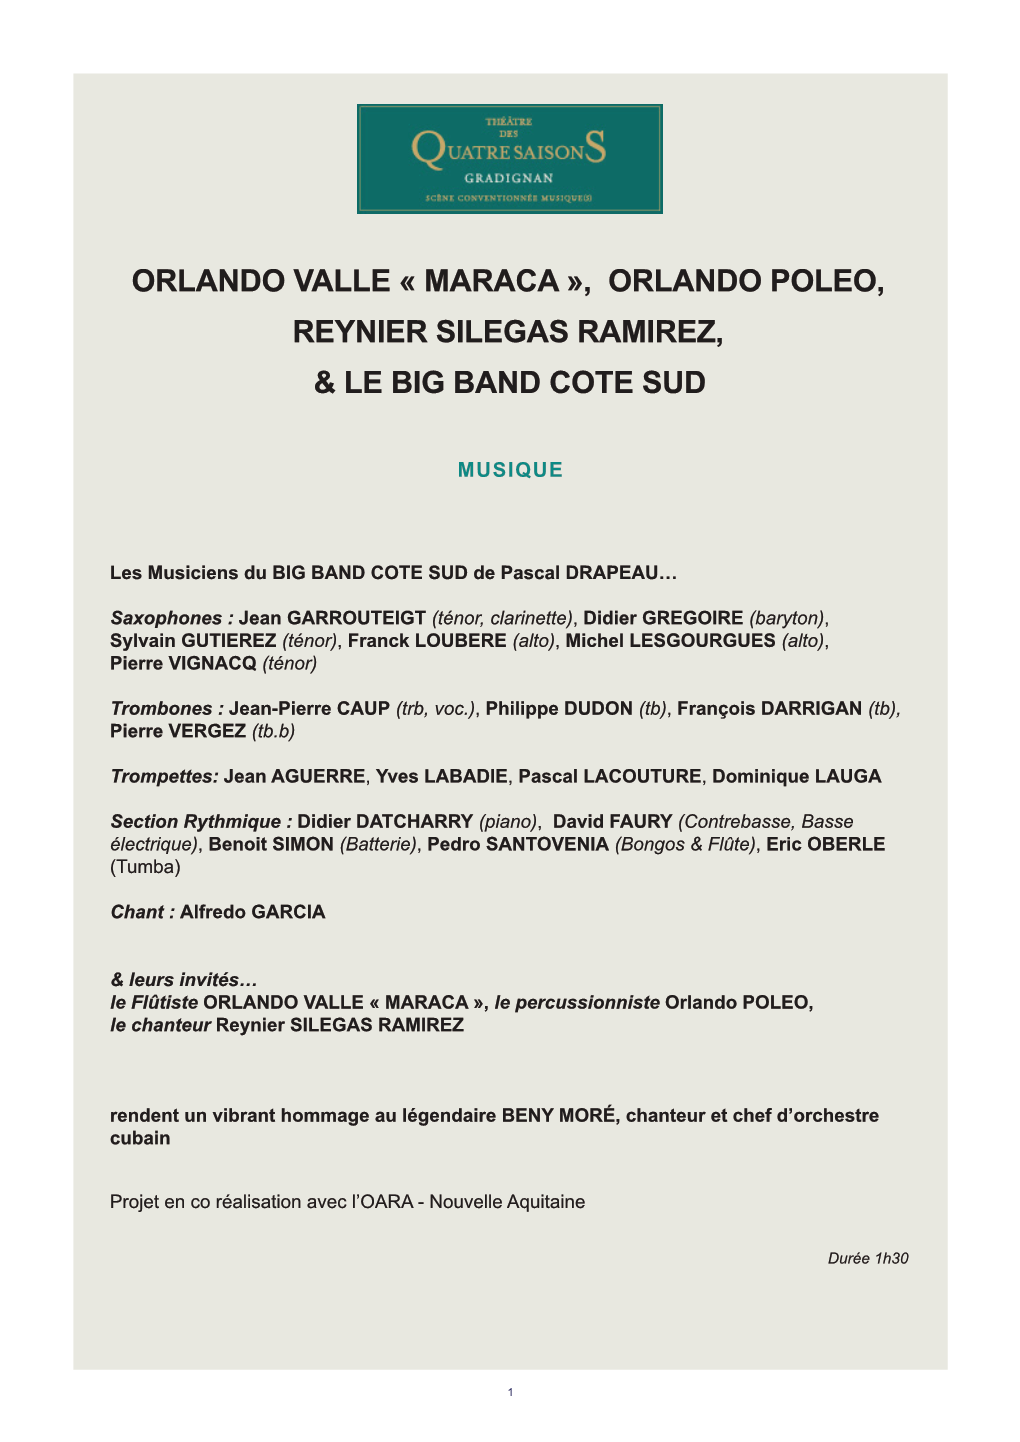 Orlando Poleo, Reynier Silegas Ramirez, & Le Big Band Cote